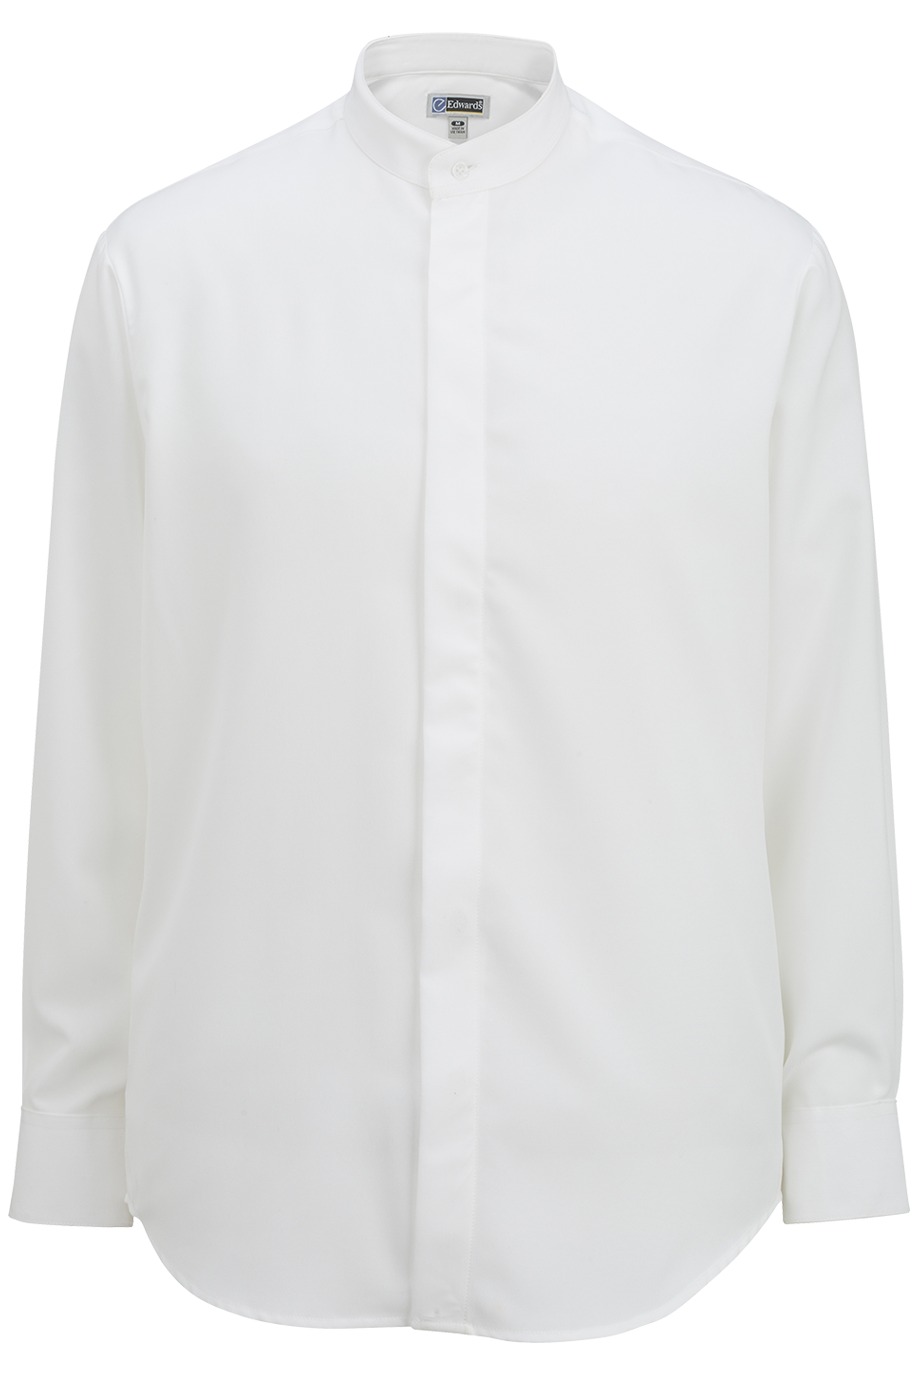 Edwards Garment 1392 - Batiste Banded Collar Shirt